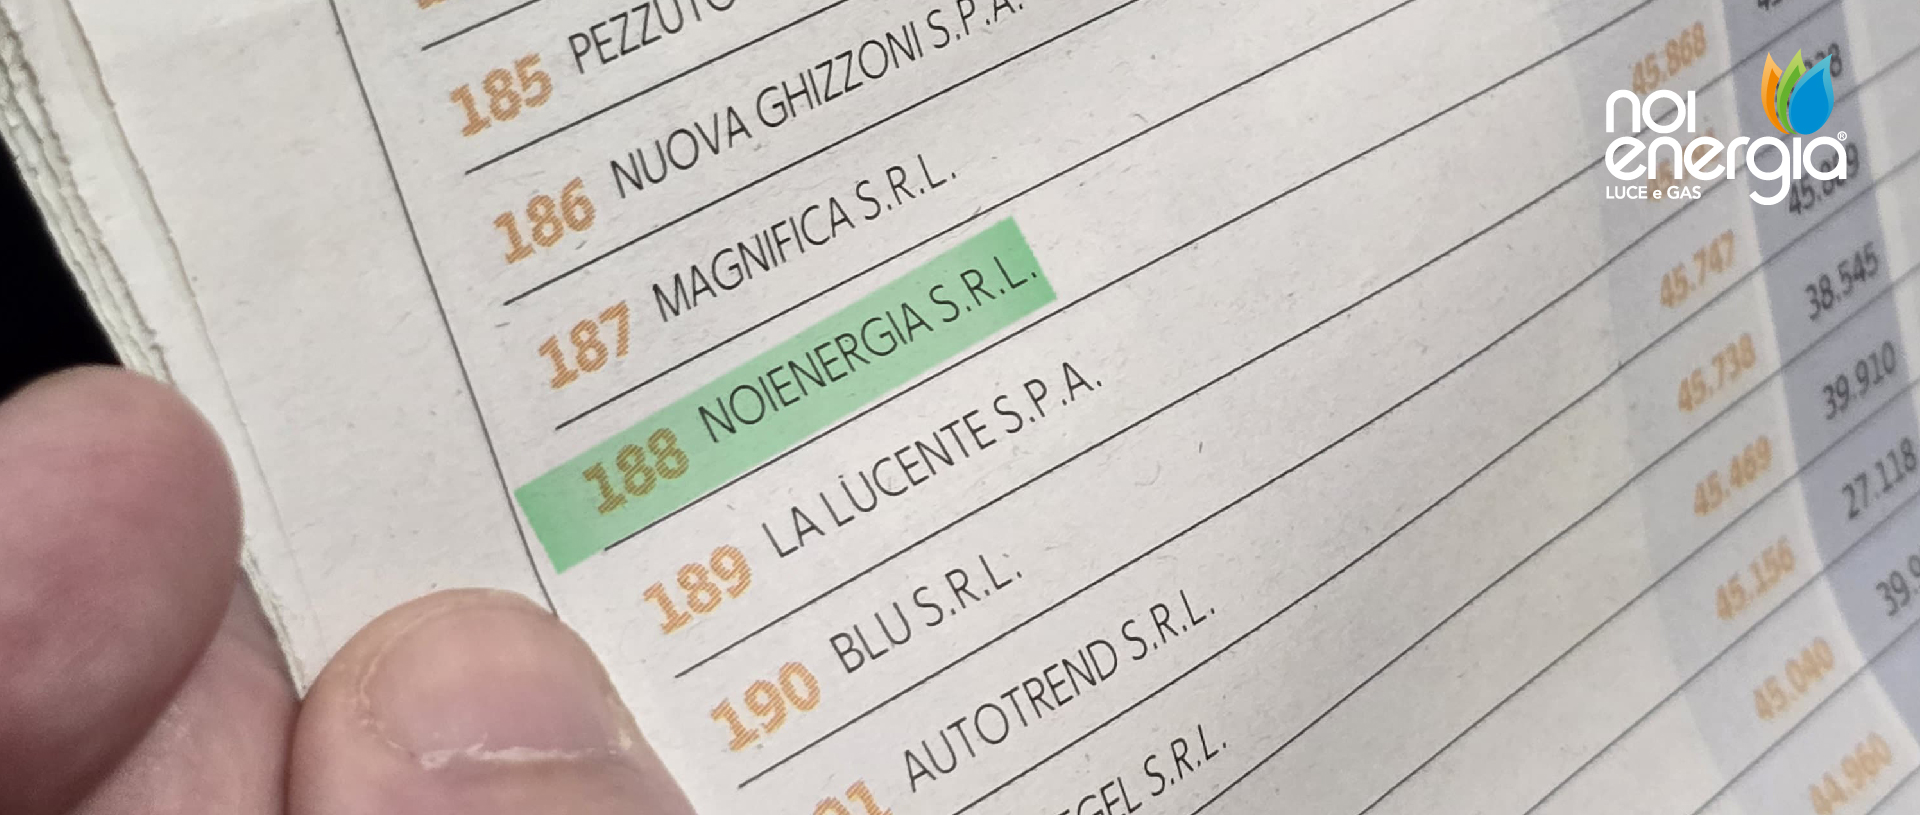 NoiEnergia top 300 Puglia e Basilicata